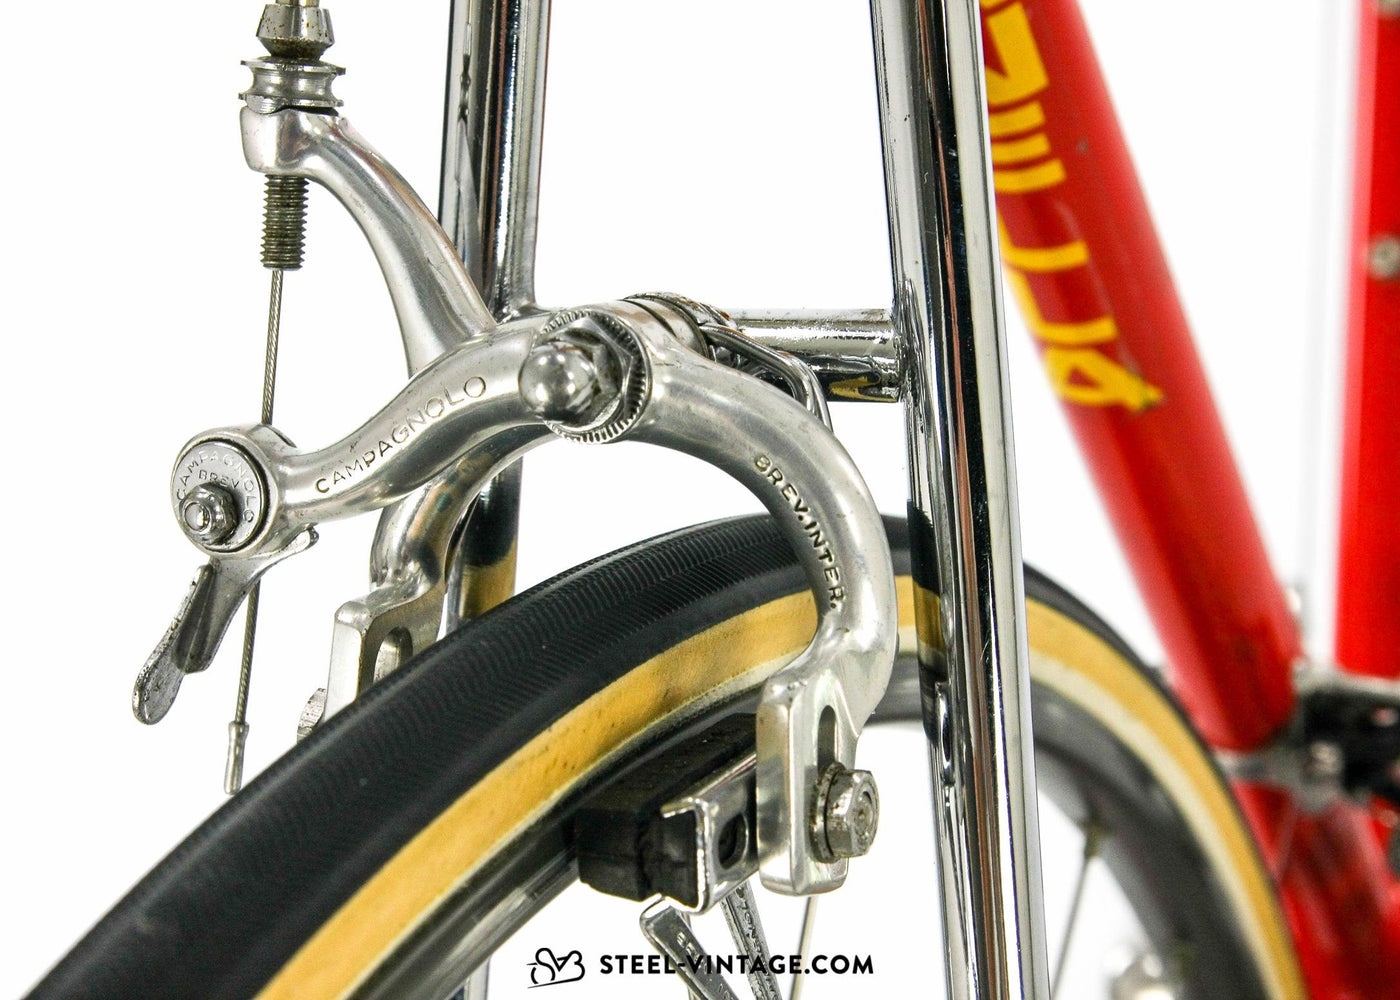 Bazzanella Super Record Classic Bicycle for Eroica - Steel Vintage Bikes